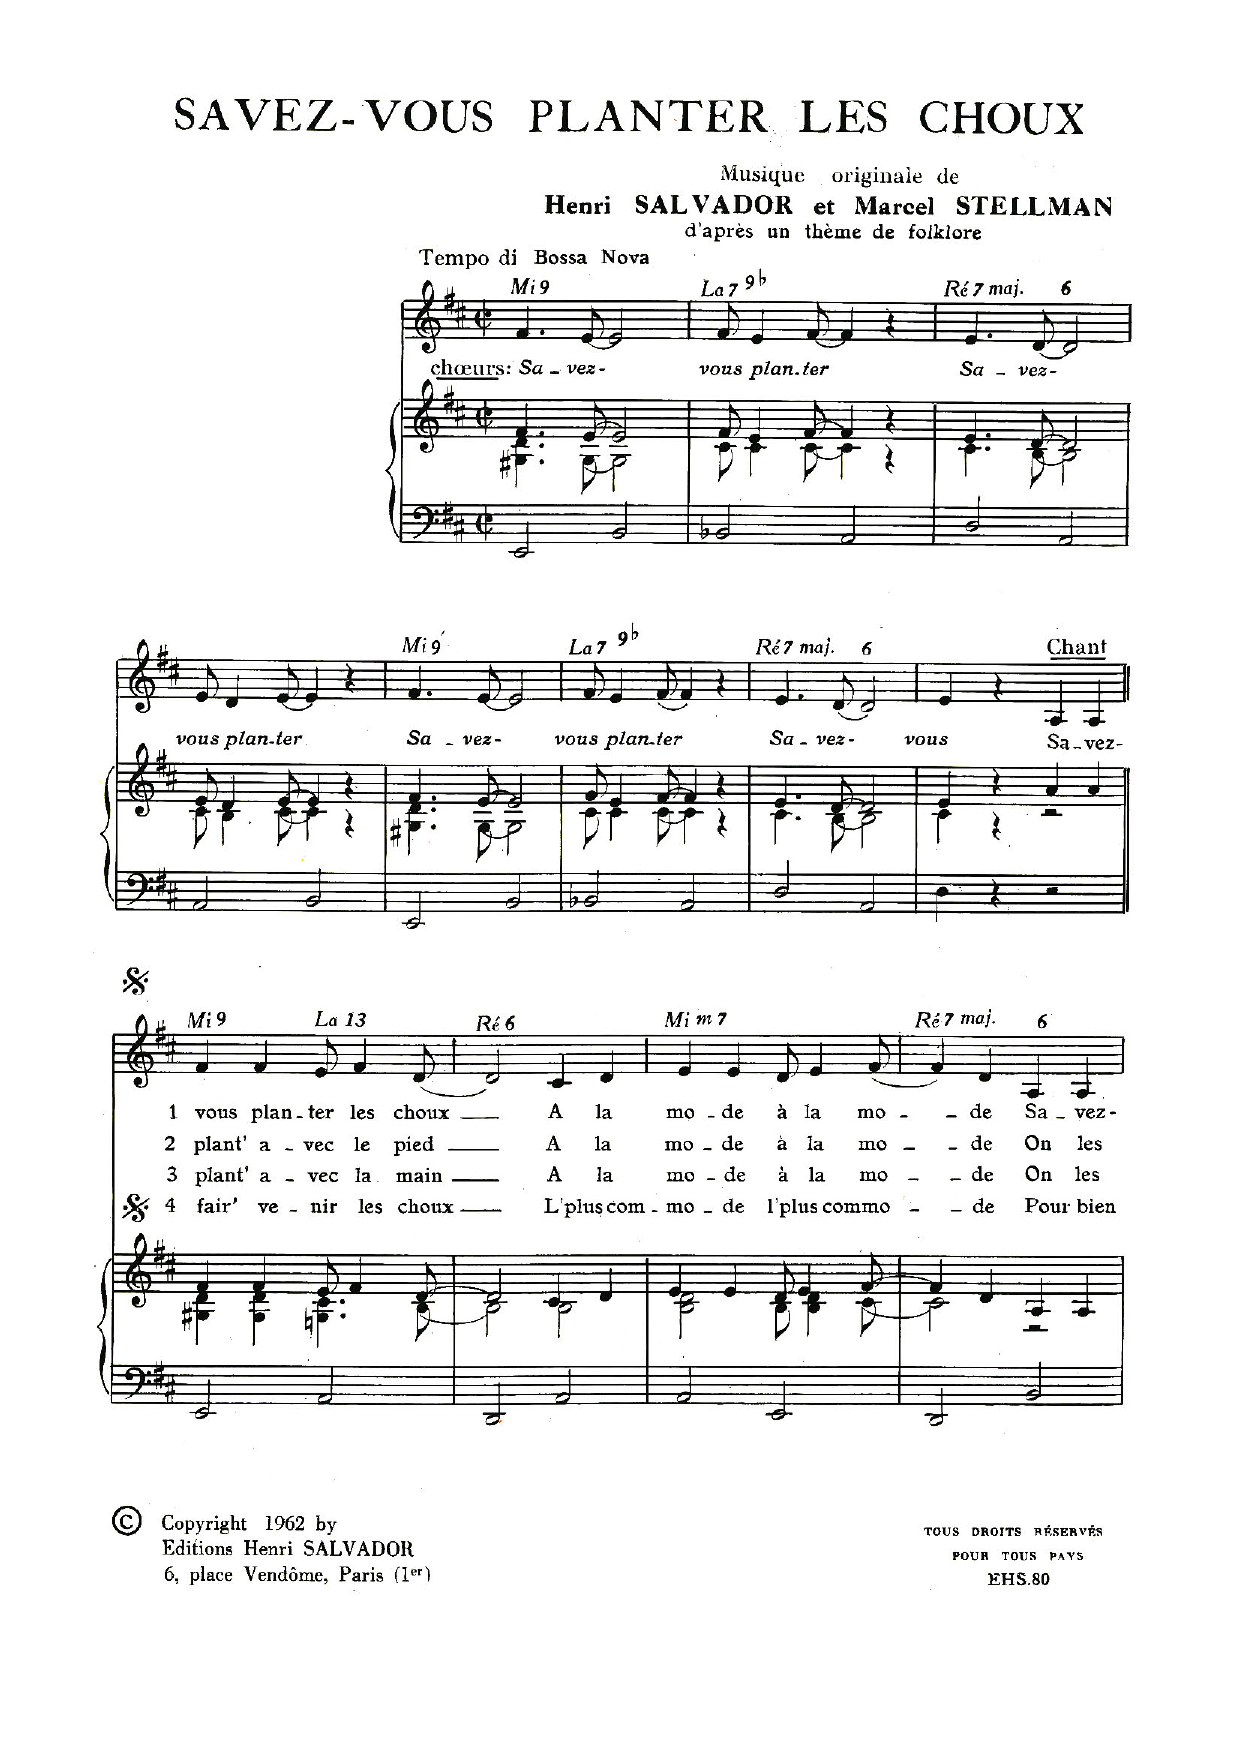 Henri Salvador Savez-Vous Planter Les Choux? sheet music notes and chords arranged for Piano & Vocal